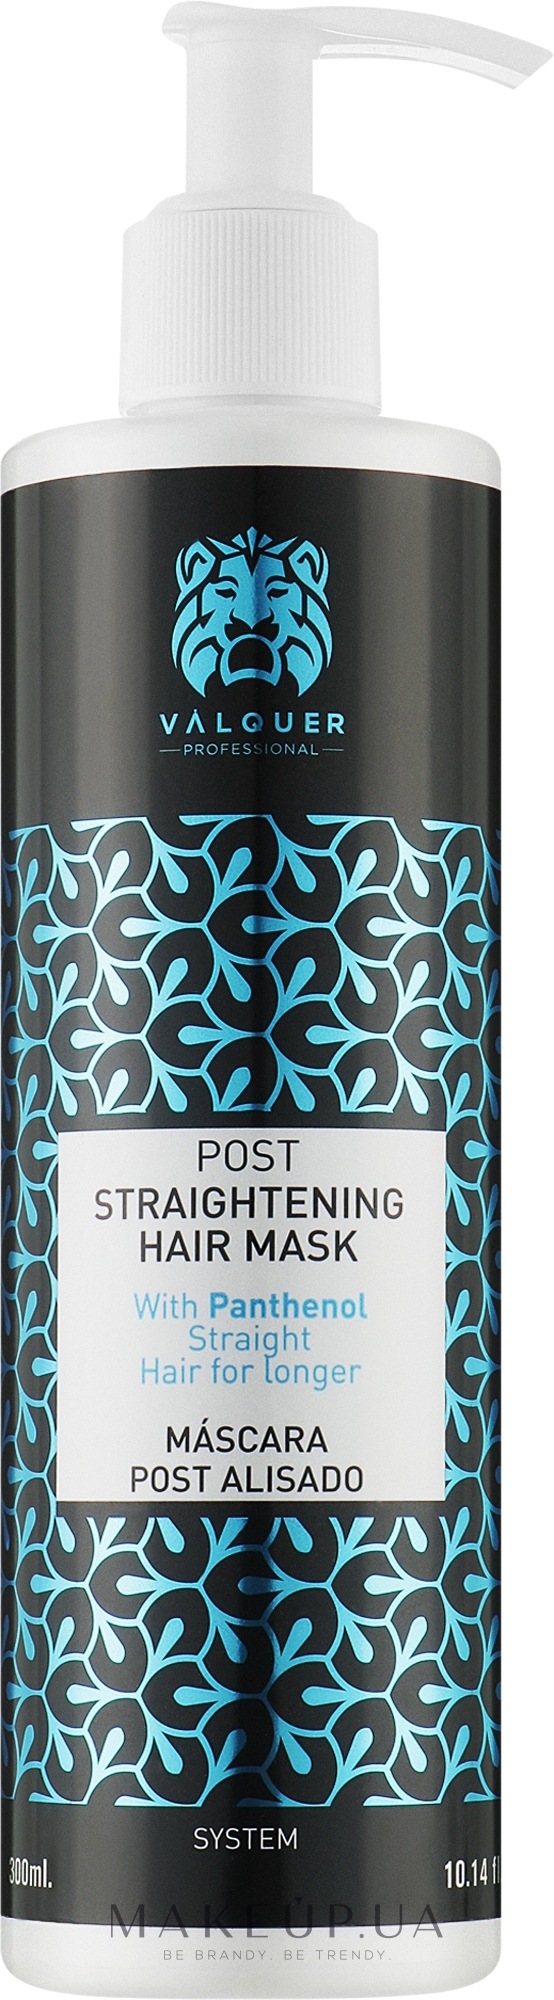 Маска після випрямлення волосся - Valquer Post Straightening Hair Mask — фото 300ml